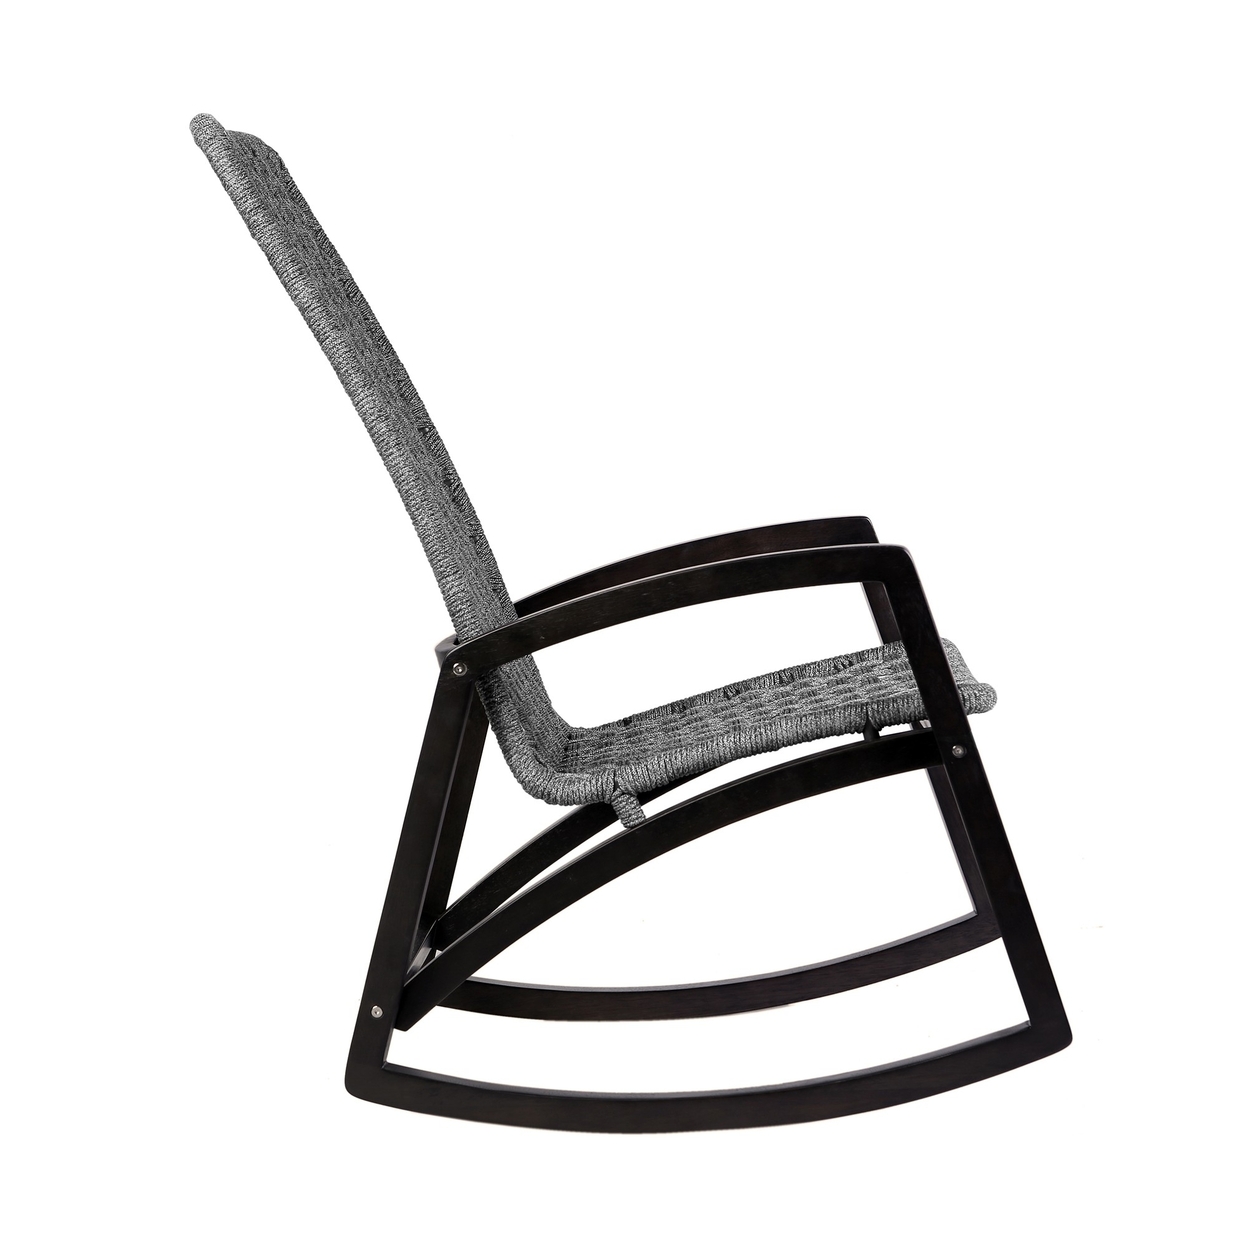 Arlo 31 Inch Patio Rocking Chair, Dark Eucalyptus Wood, Gray Rope Seat- Saltoro Sherpi